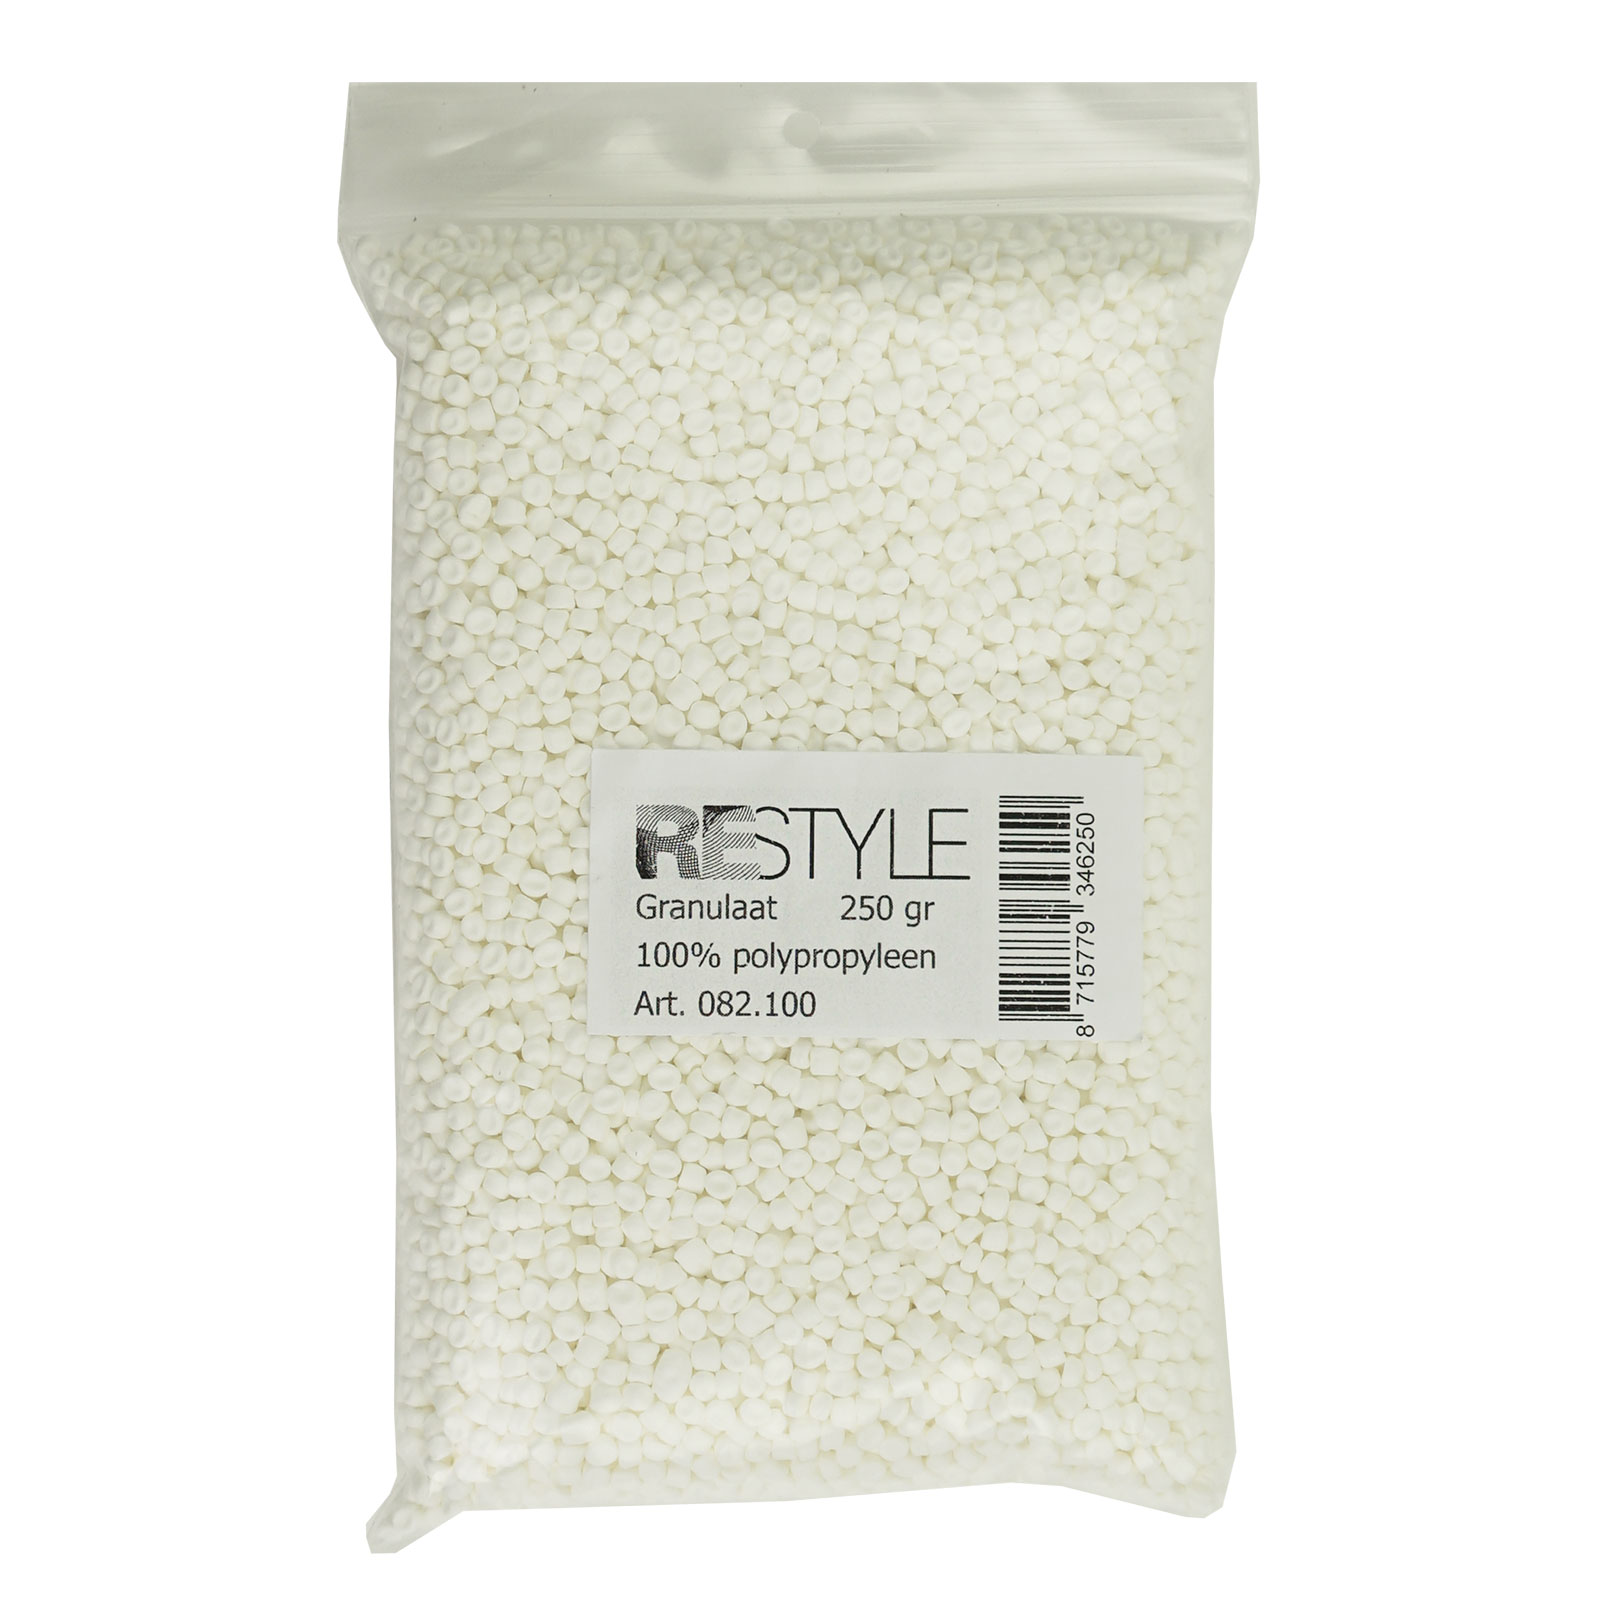 RESTyle Granulaat 250gram (Polypropyleen)